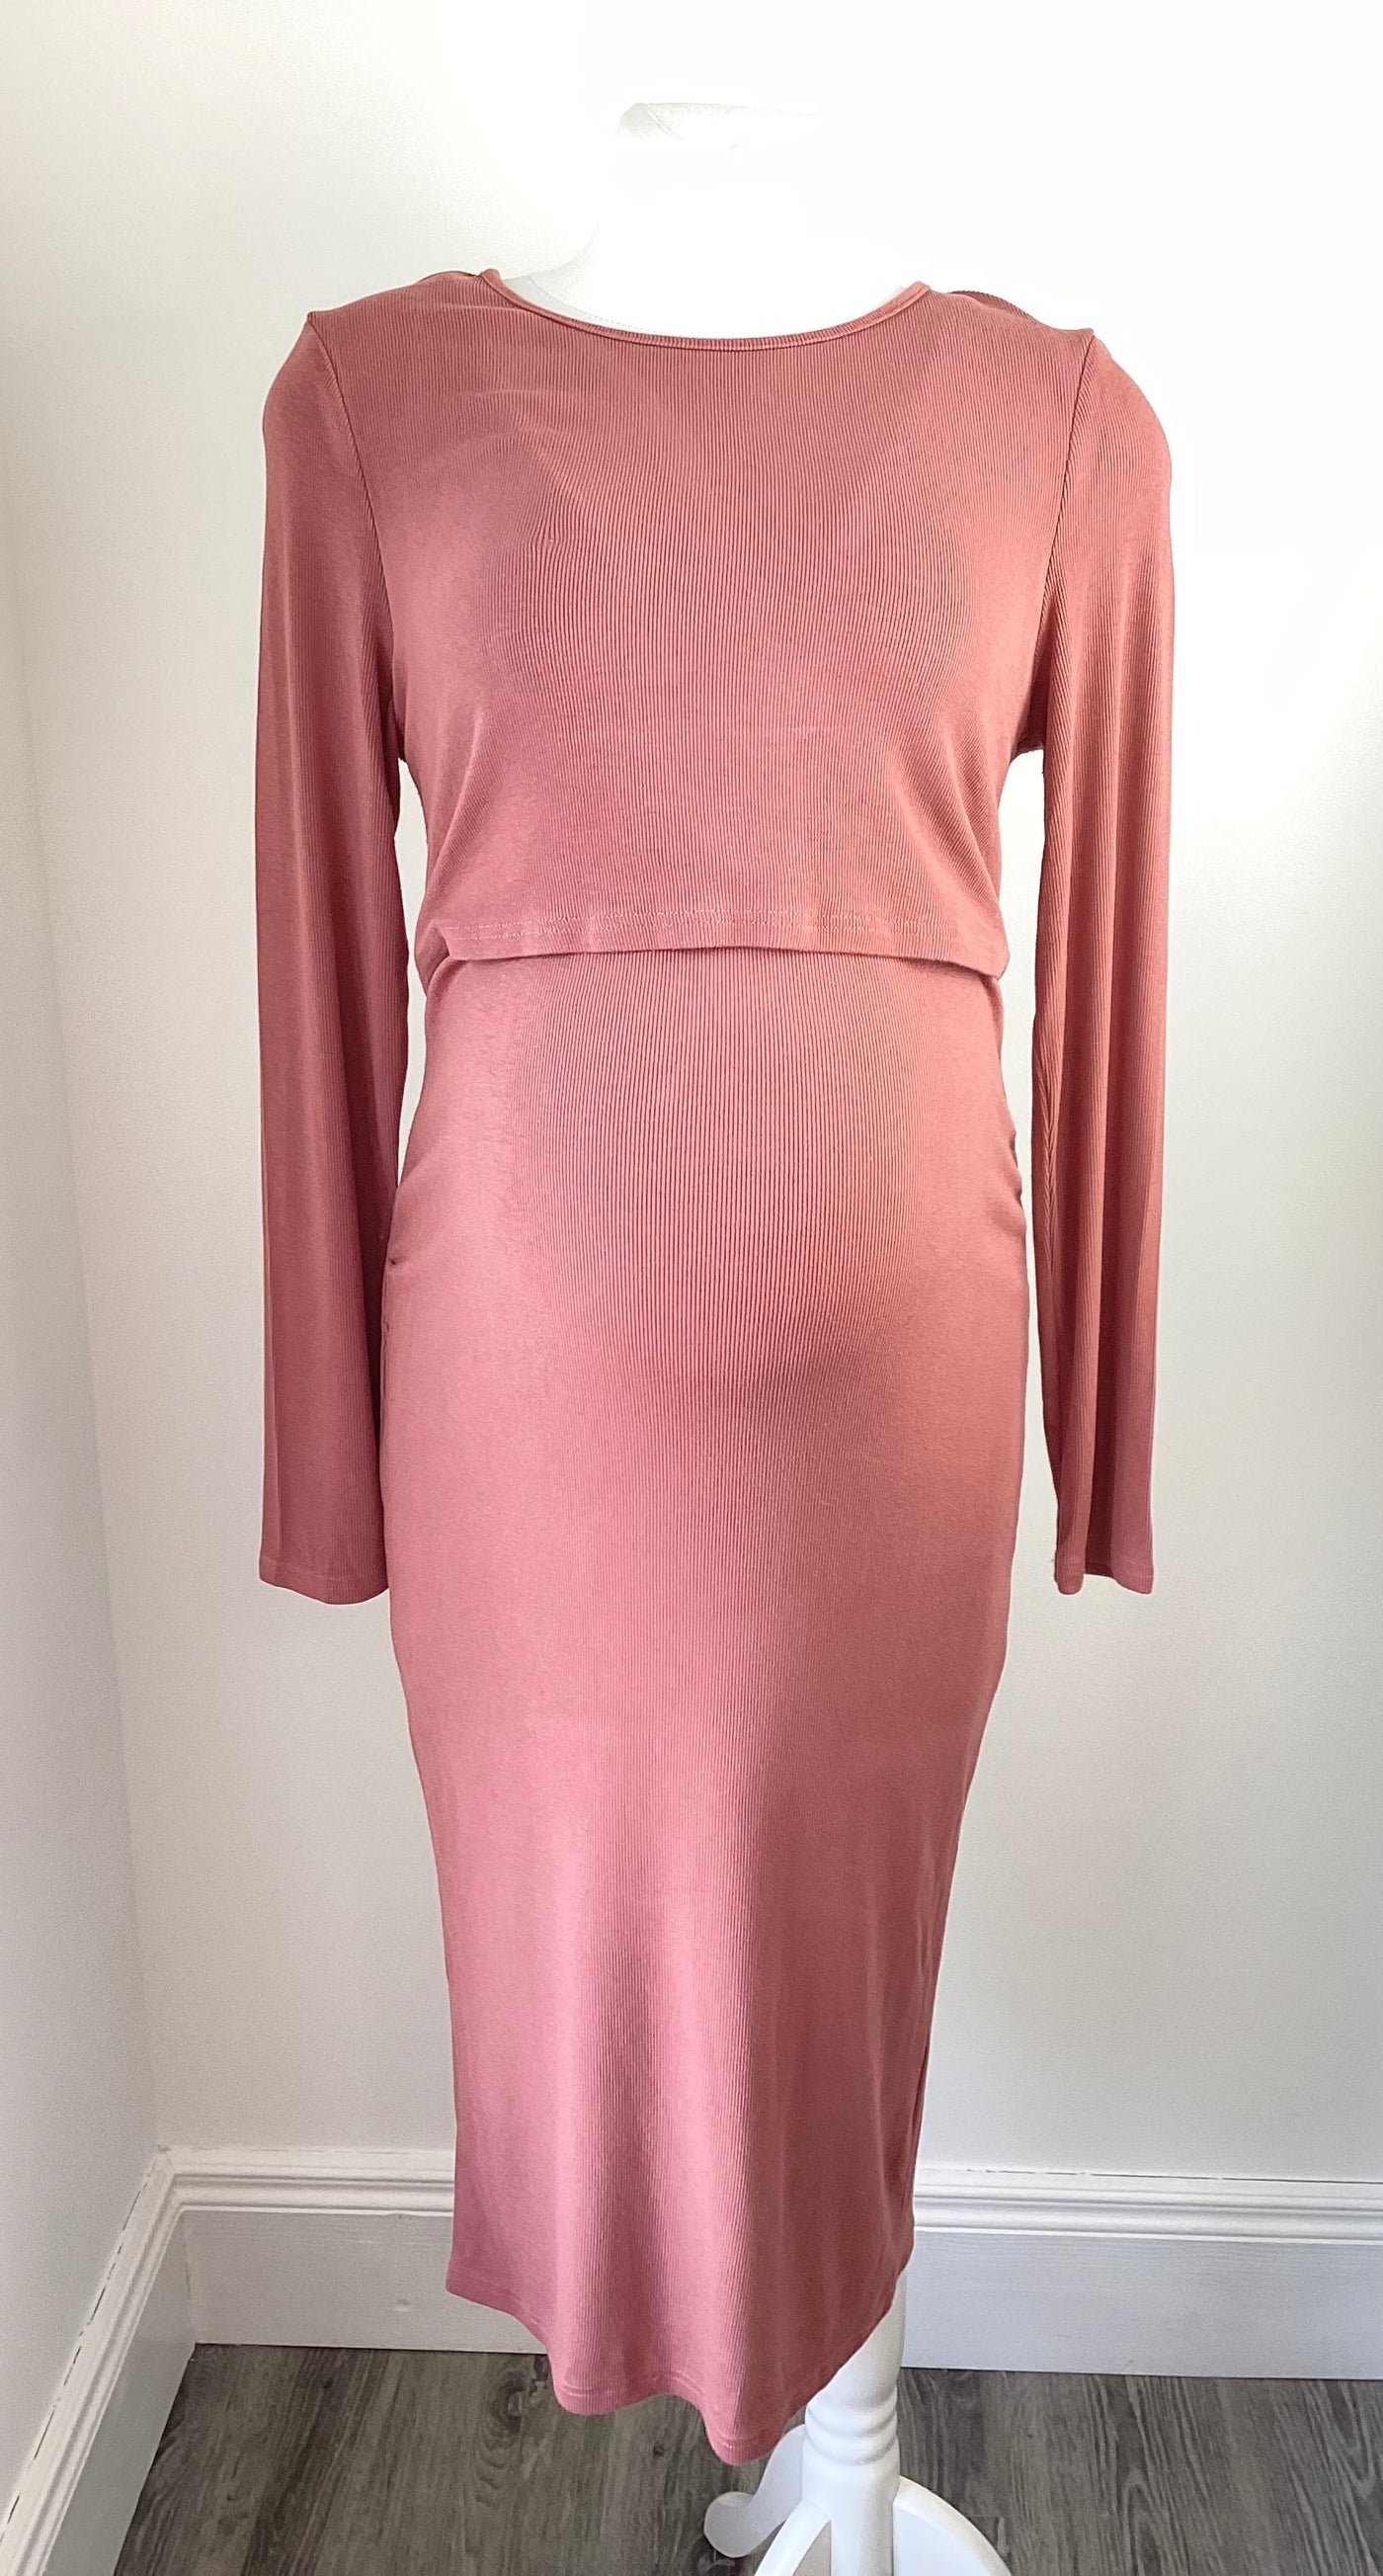 Shein Maternity dusky pink long sleeved ribbed nursing dress - Size L (Approx UK 12/14)